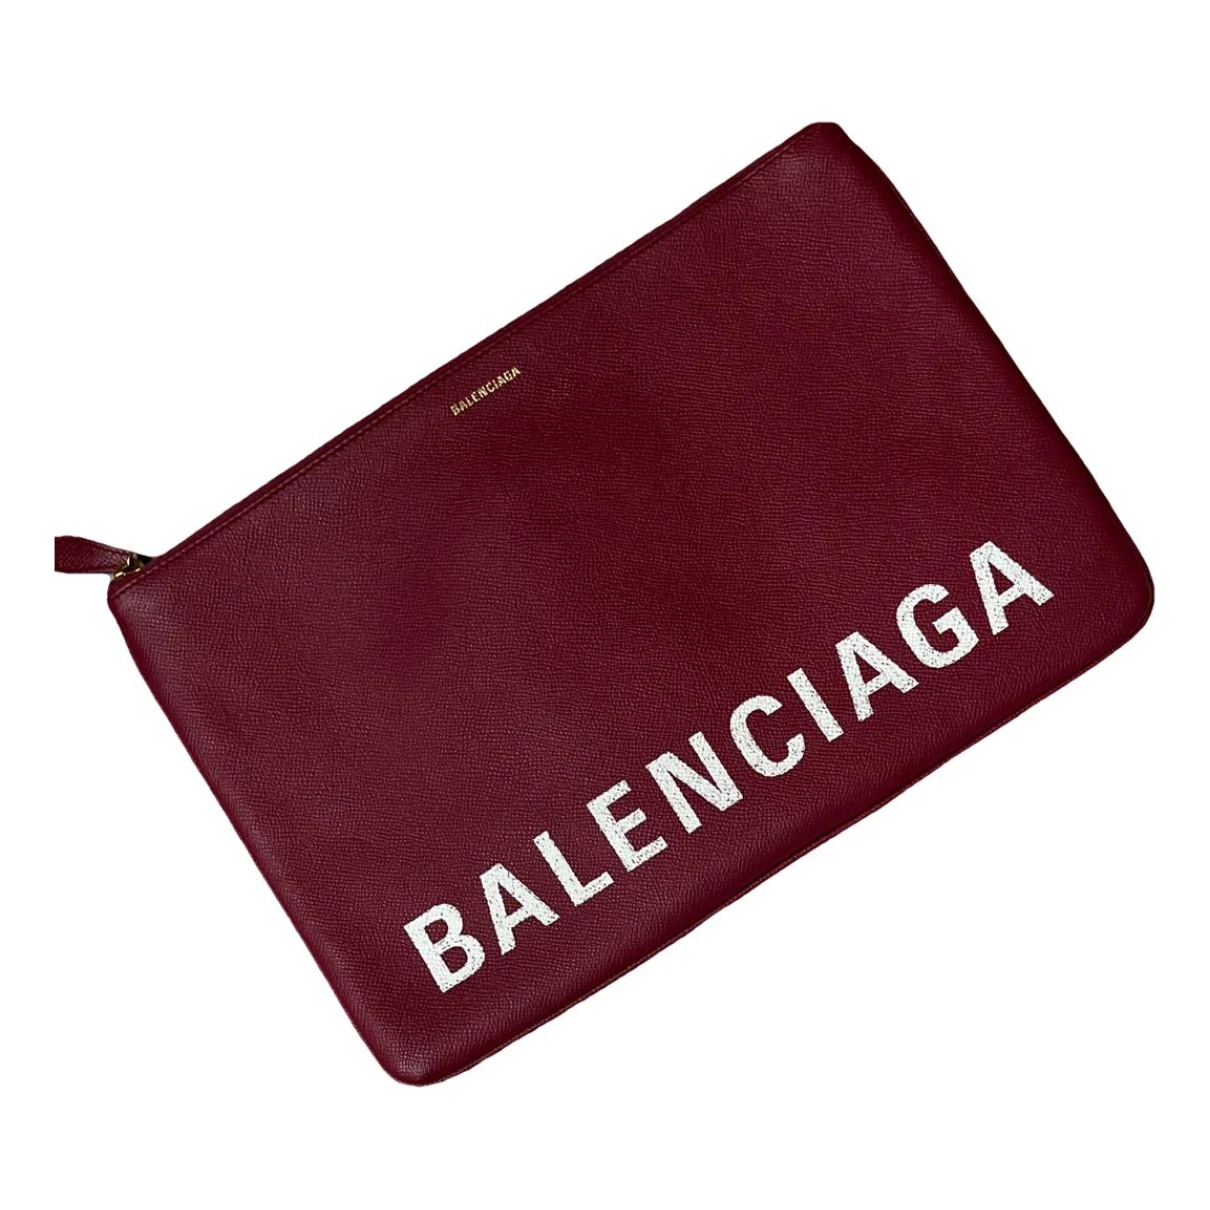 Pre-owned Balenciaga Envelop Leather Clutch Bag In Burgundy